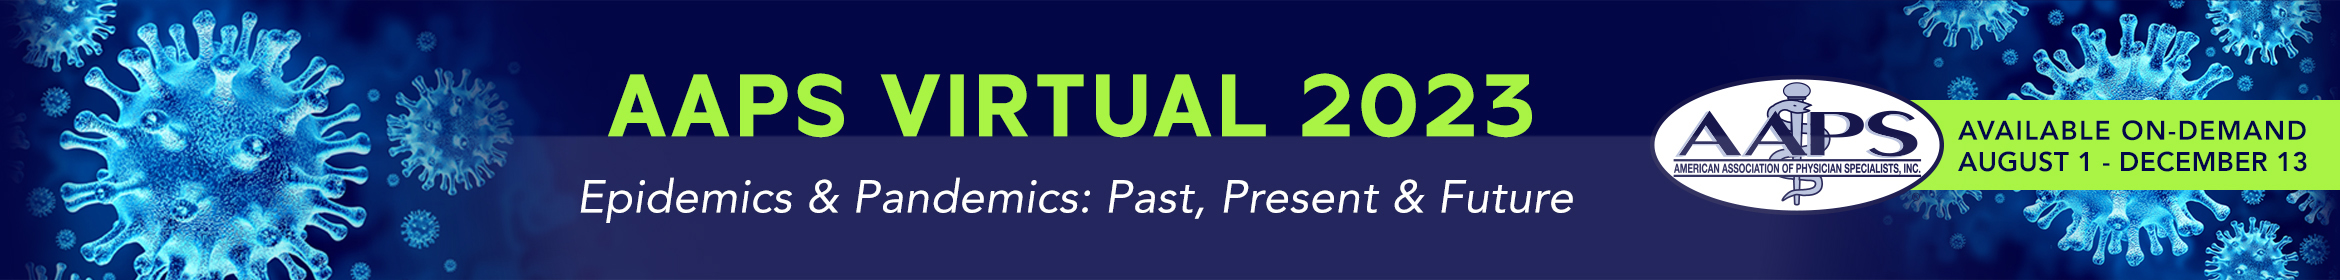 AAPS Virtual 2023 Main banner